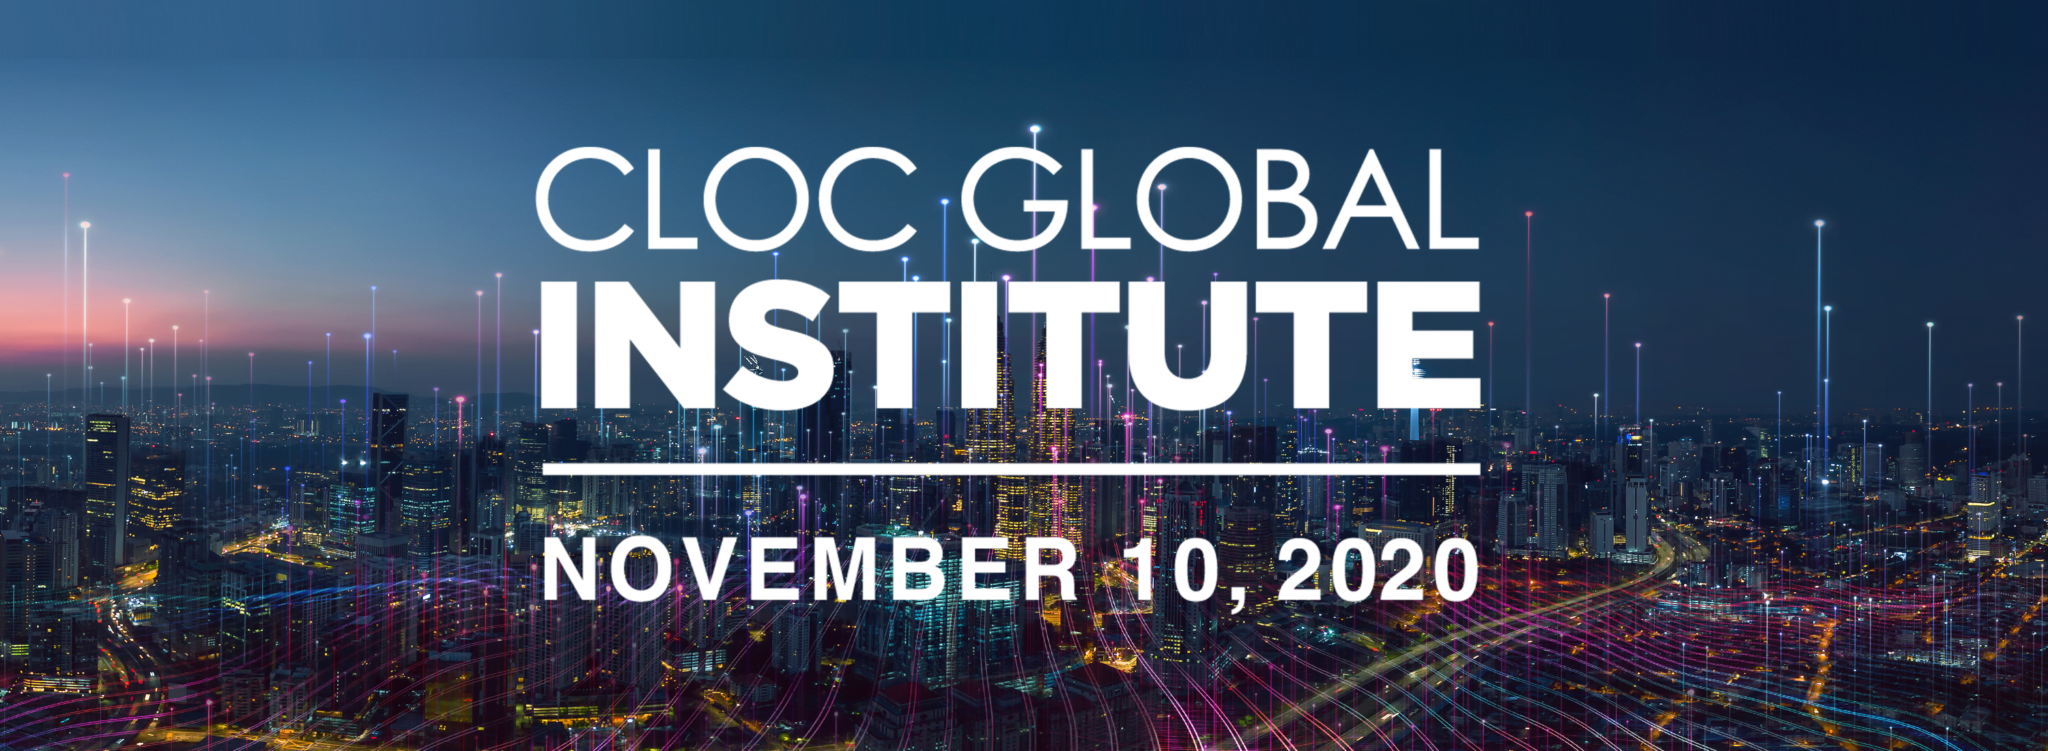 CLOC Global Institute major announcements expected LawTech.Asia